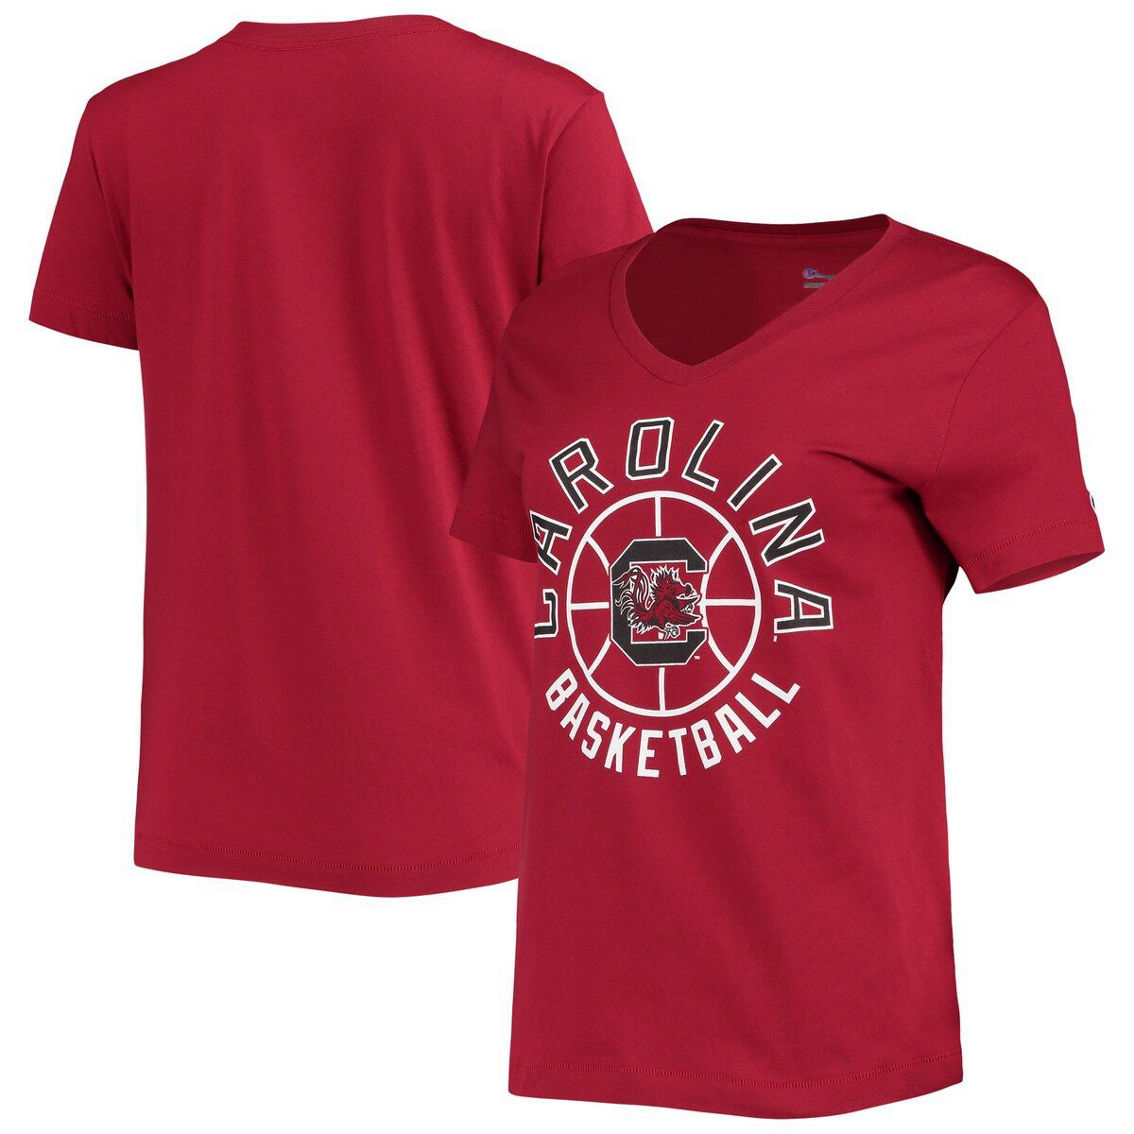 Champion Women's Garnet South Carolina Gamecocks Basketball V-Neck T-Shirt - Image 2 of 4